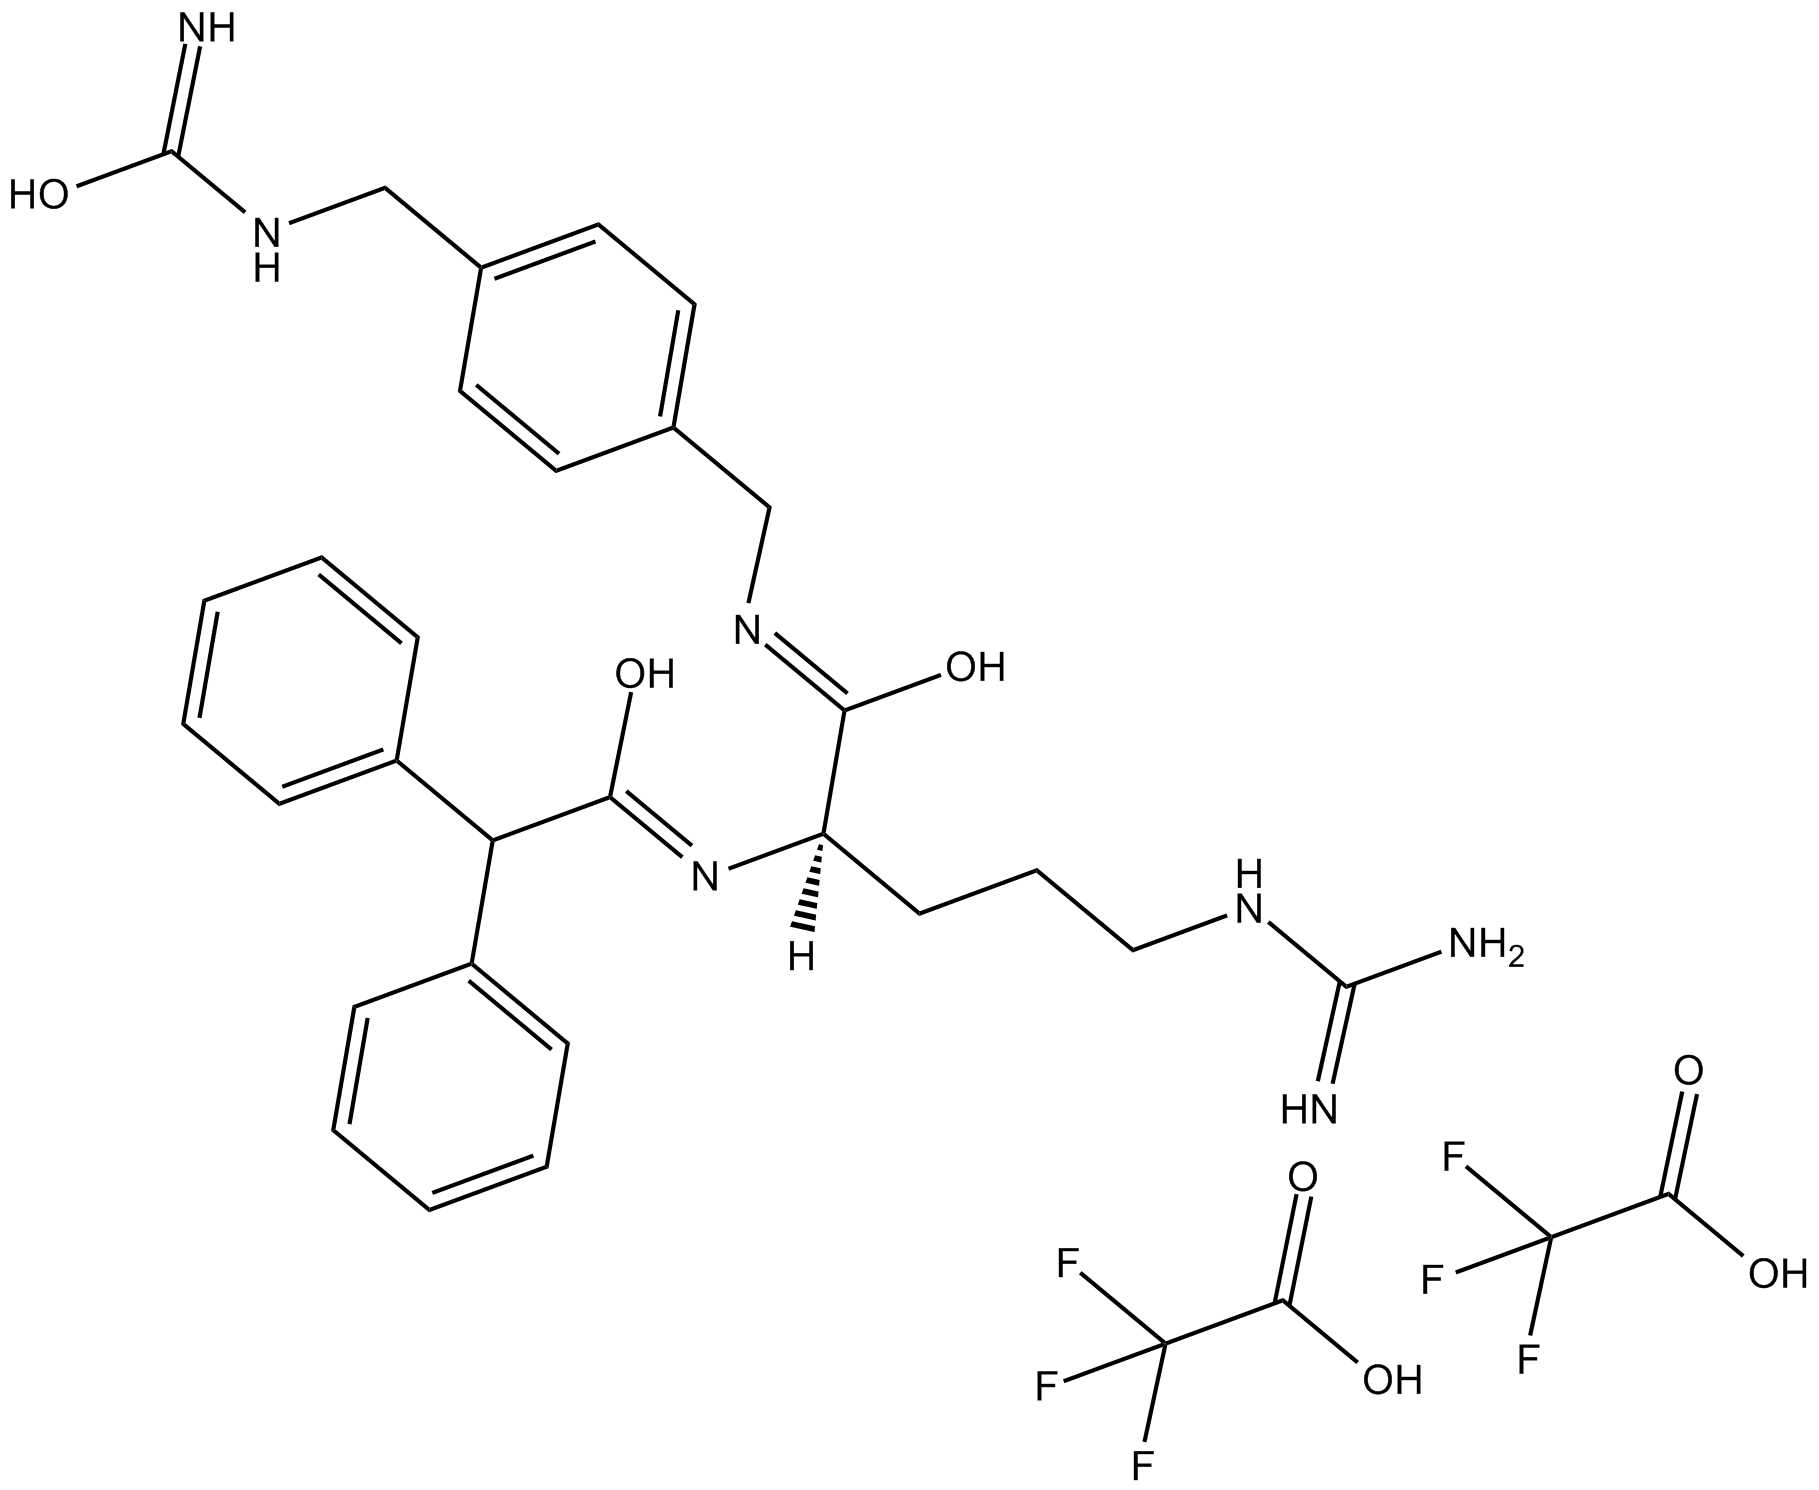 BIBO 3304 trifluoroacetate